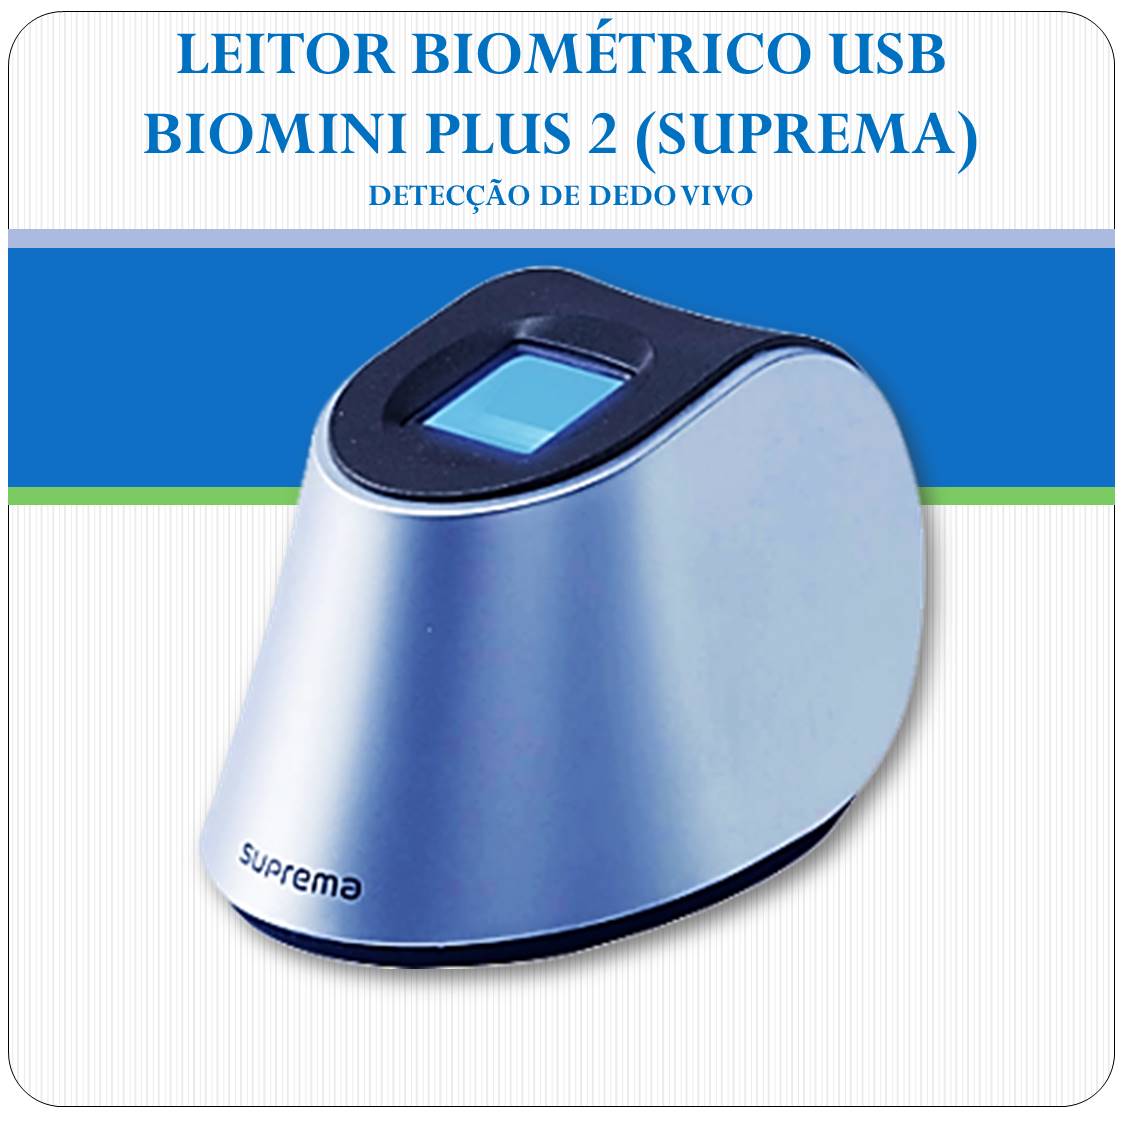 Leitor Biométrico USB BioMini Plus 2 - Suprema